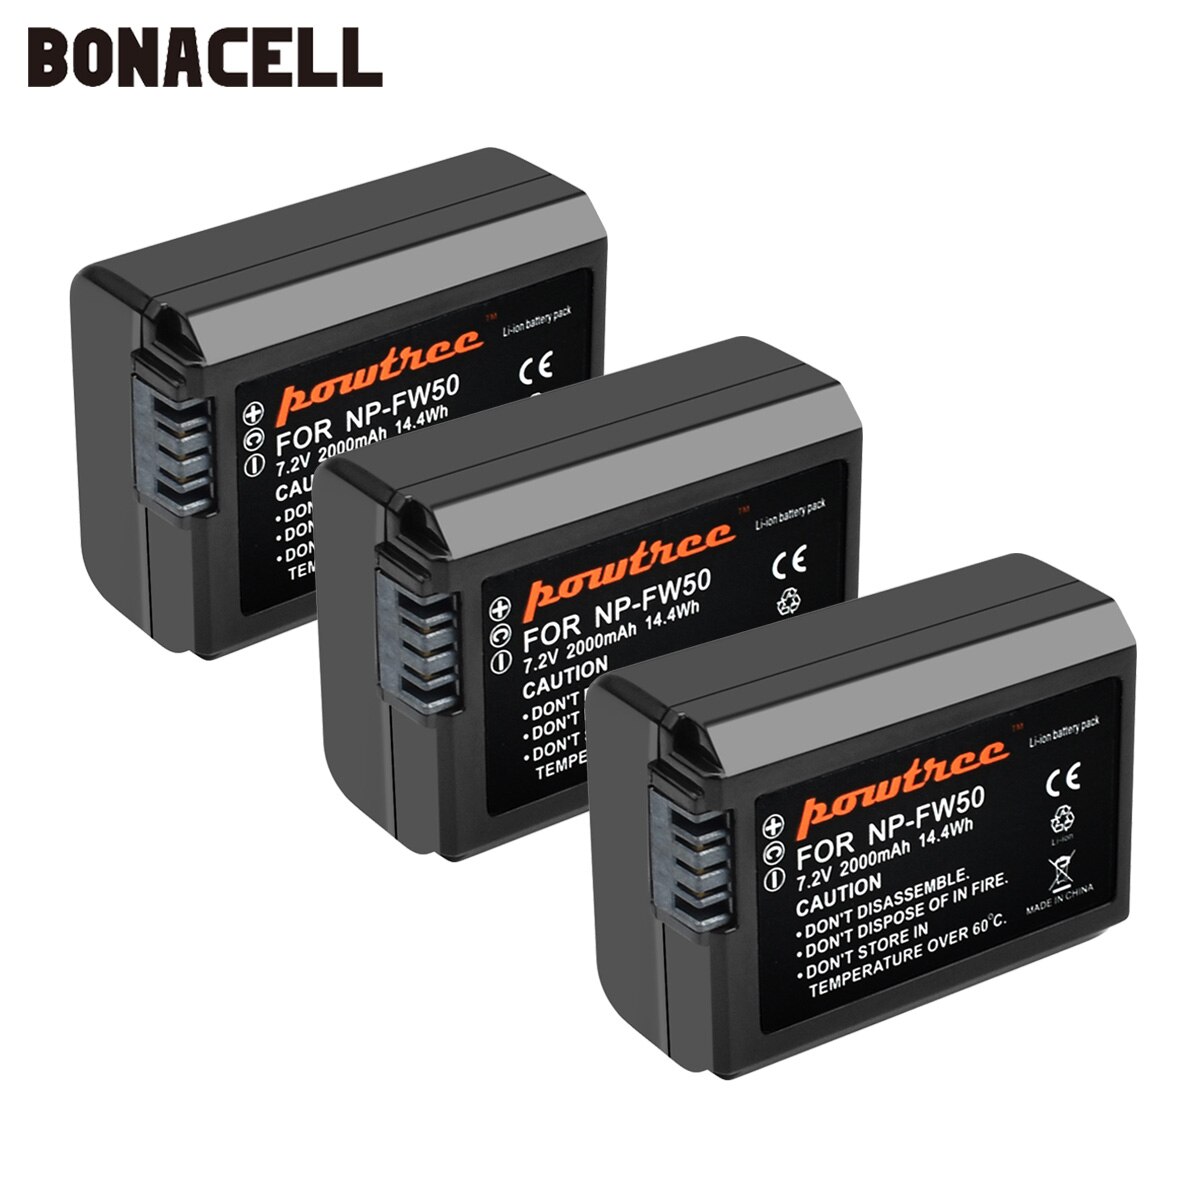 Bonacell 2000mah NP-FW50 NP FW50 batería AKKU para Sony NEX-7 NEX-5N NEX-5R NEX-F3 NEX-3D alfa a5000 a6000 DSC-RX10 Alpha 7 a7II: 3 Pack Battery